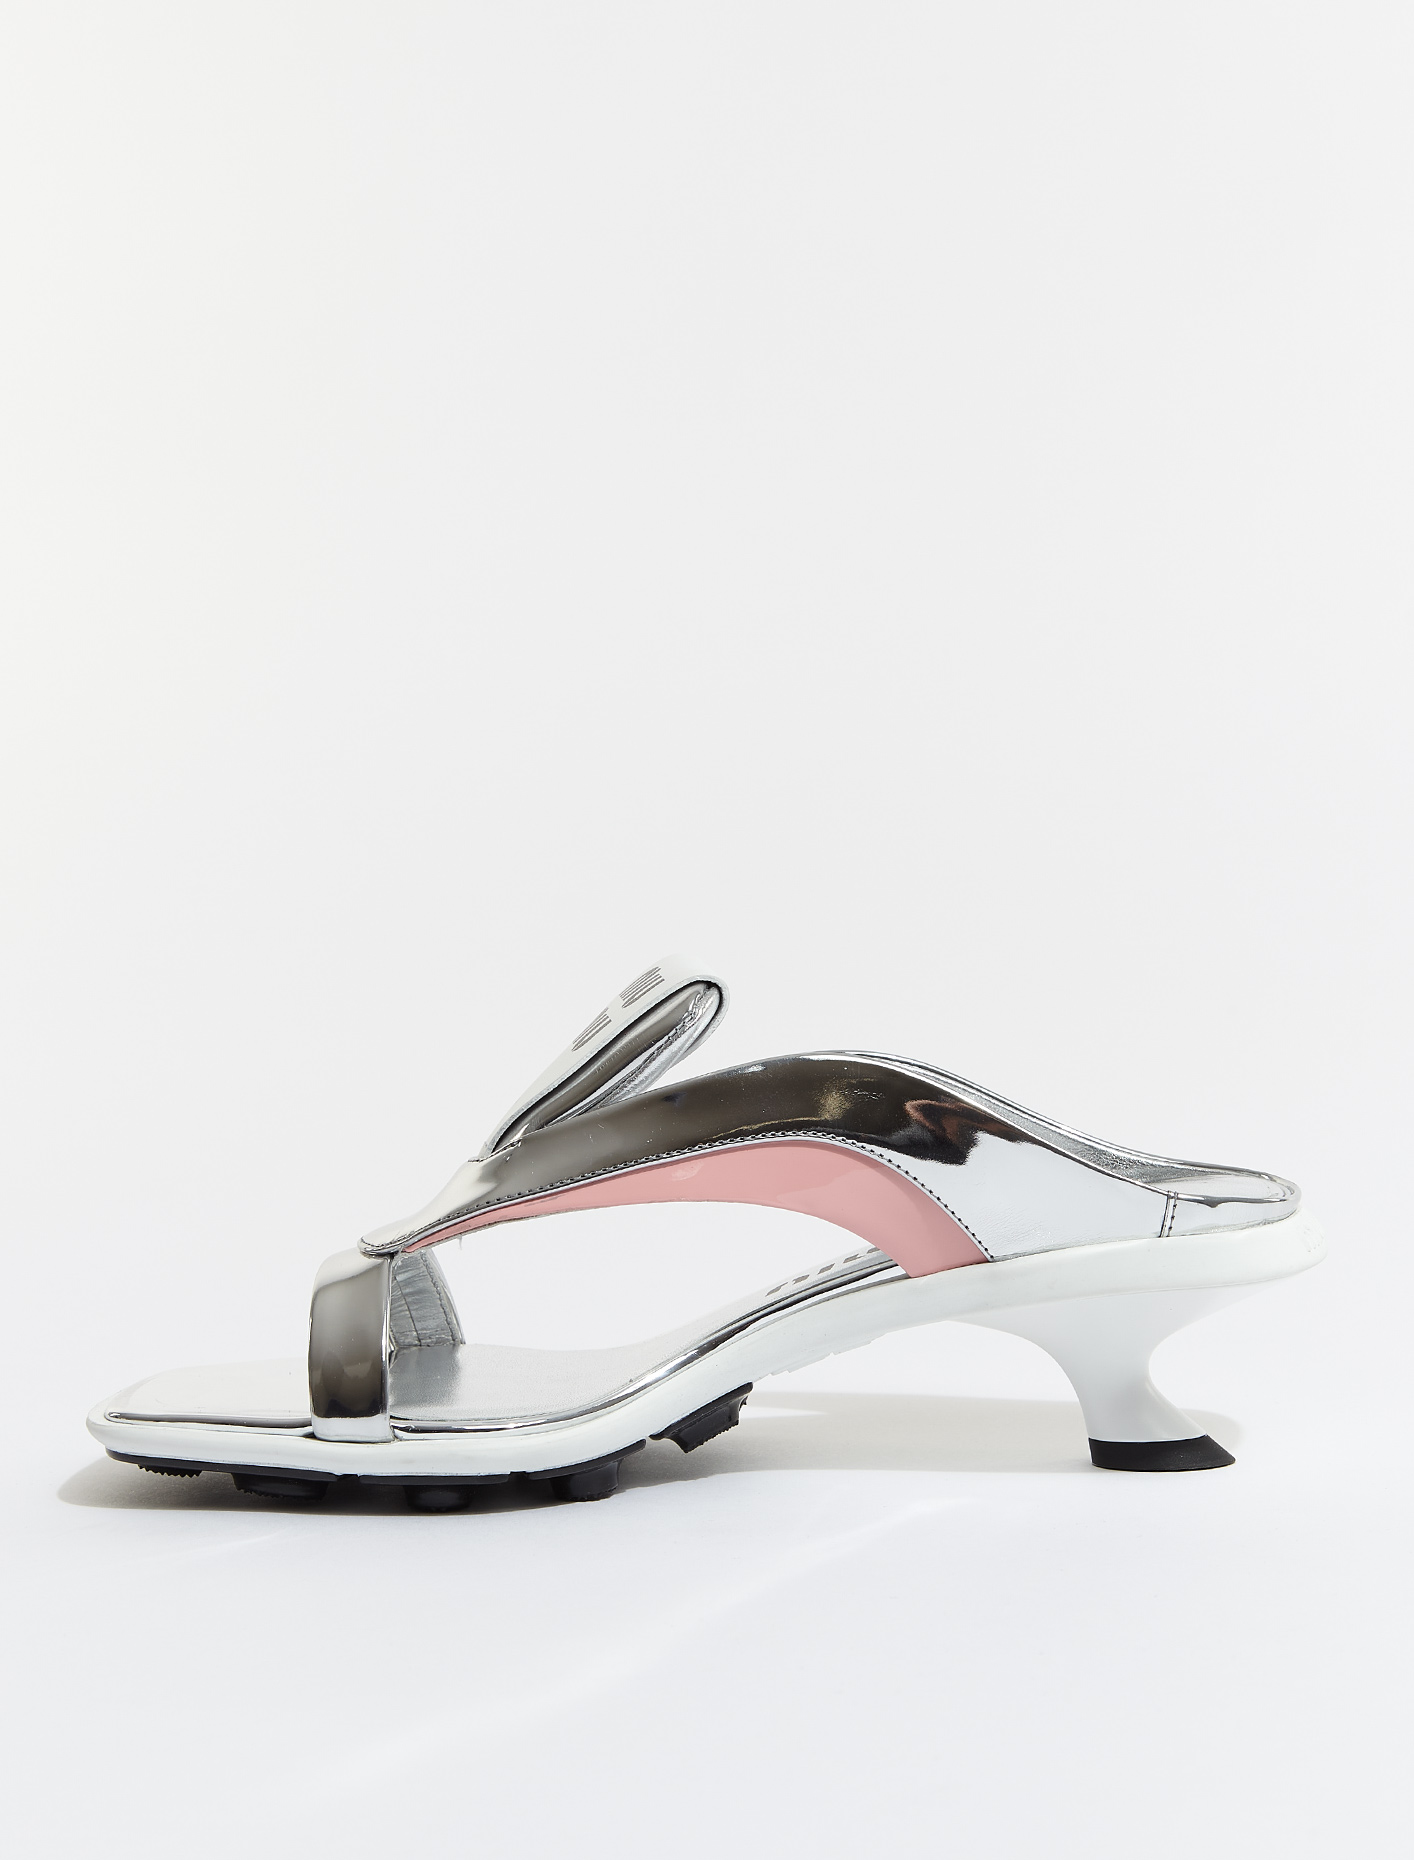 Miu Miu Sports Sandals in Silver & Pink | Voo Store Berlin | Worldwide ...